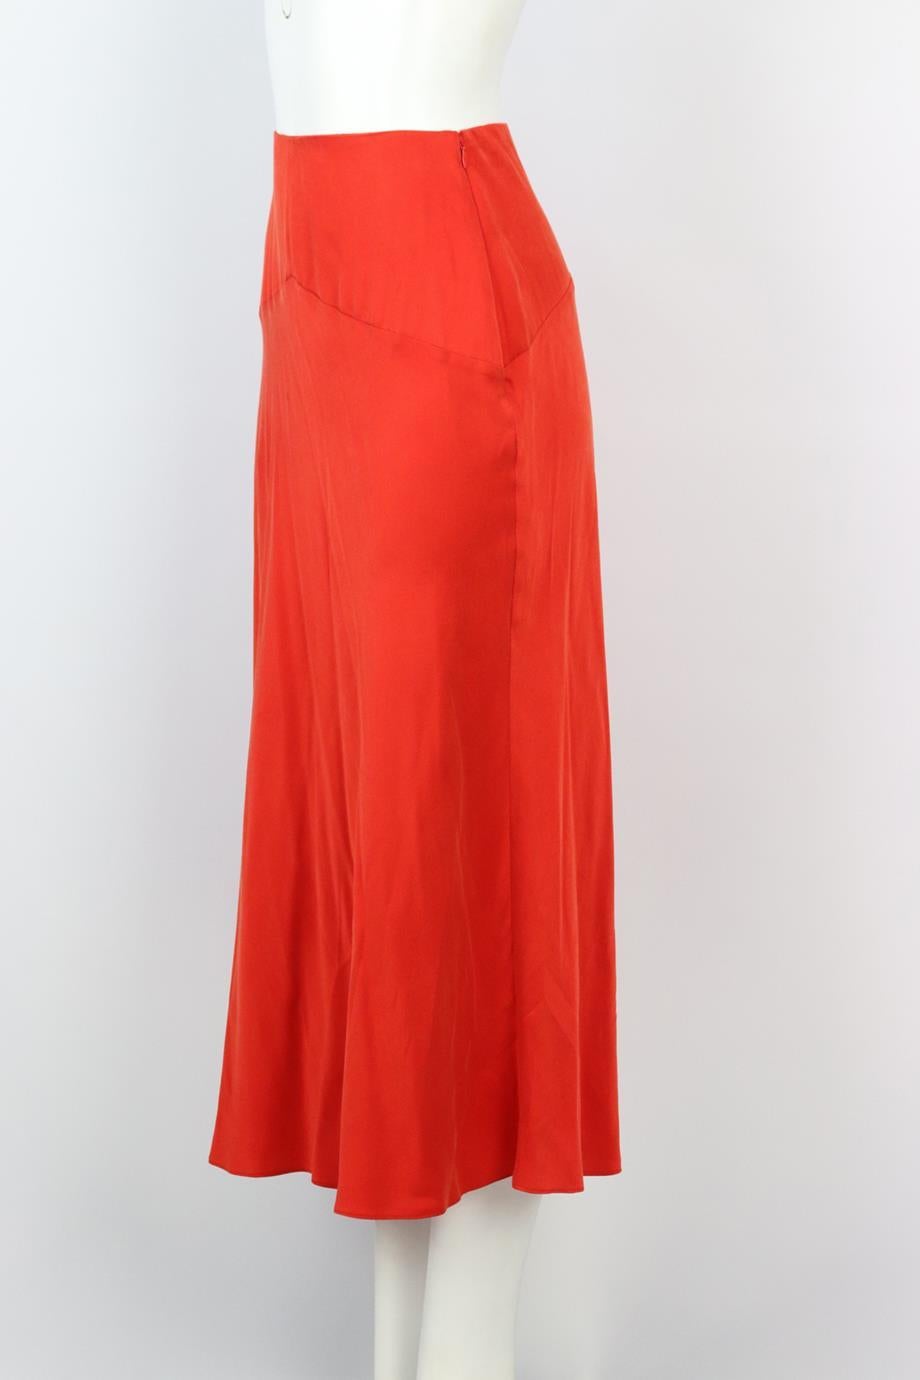 Red Tove Silk Midi Skirt Fr 36 Uk 8